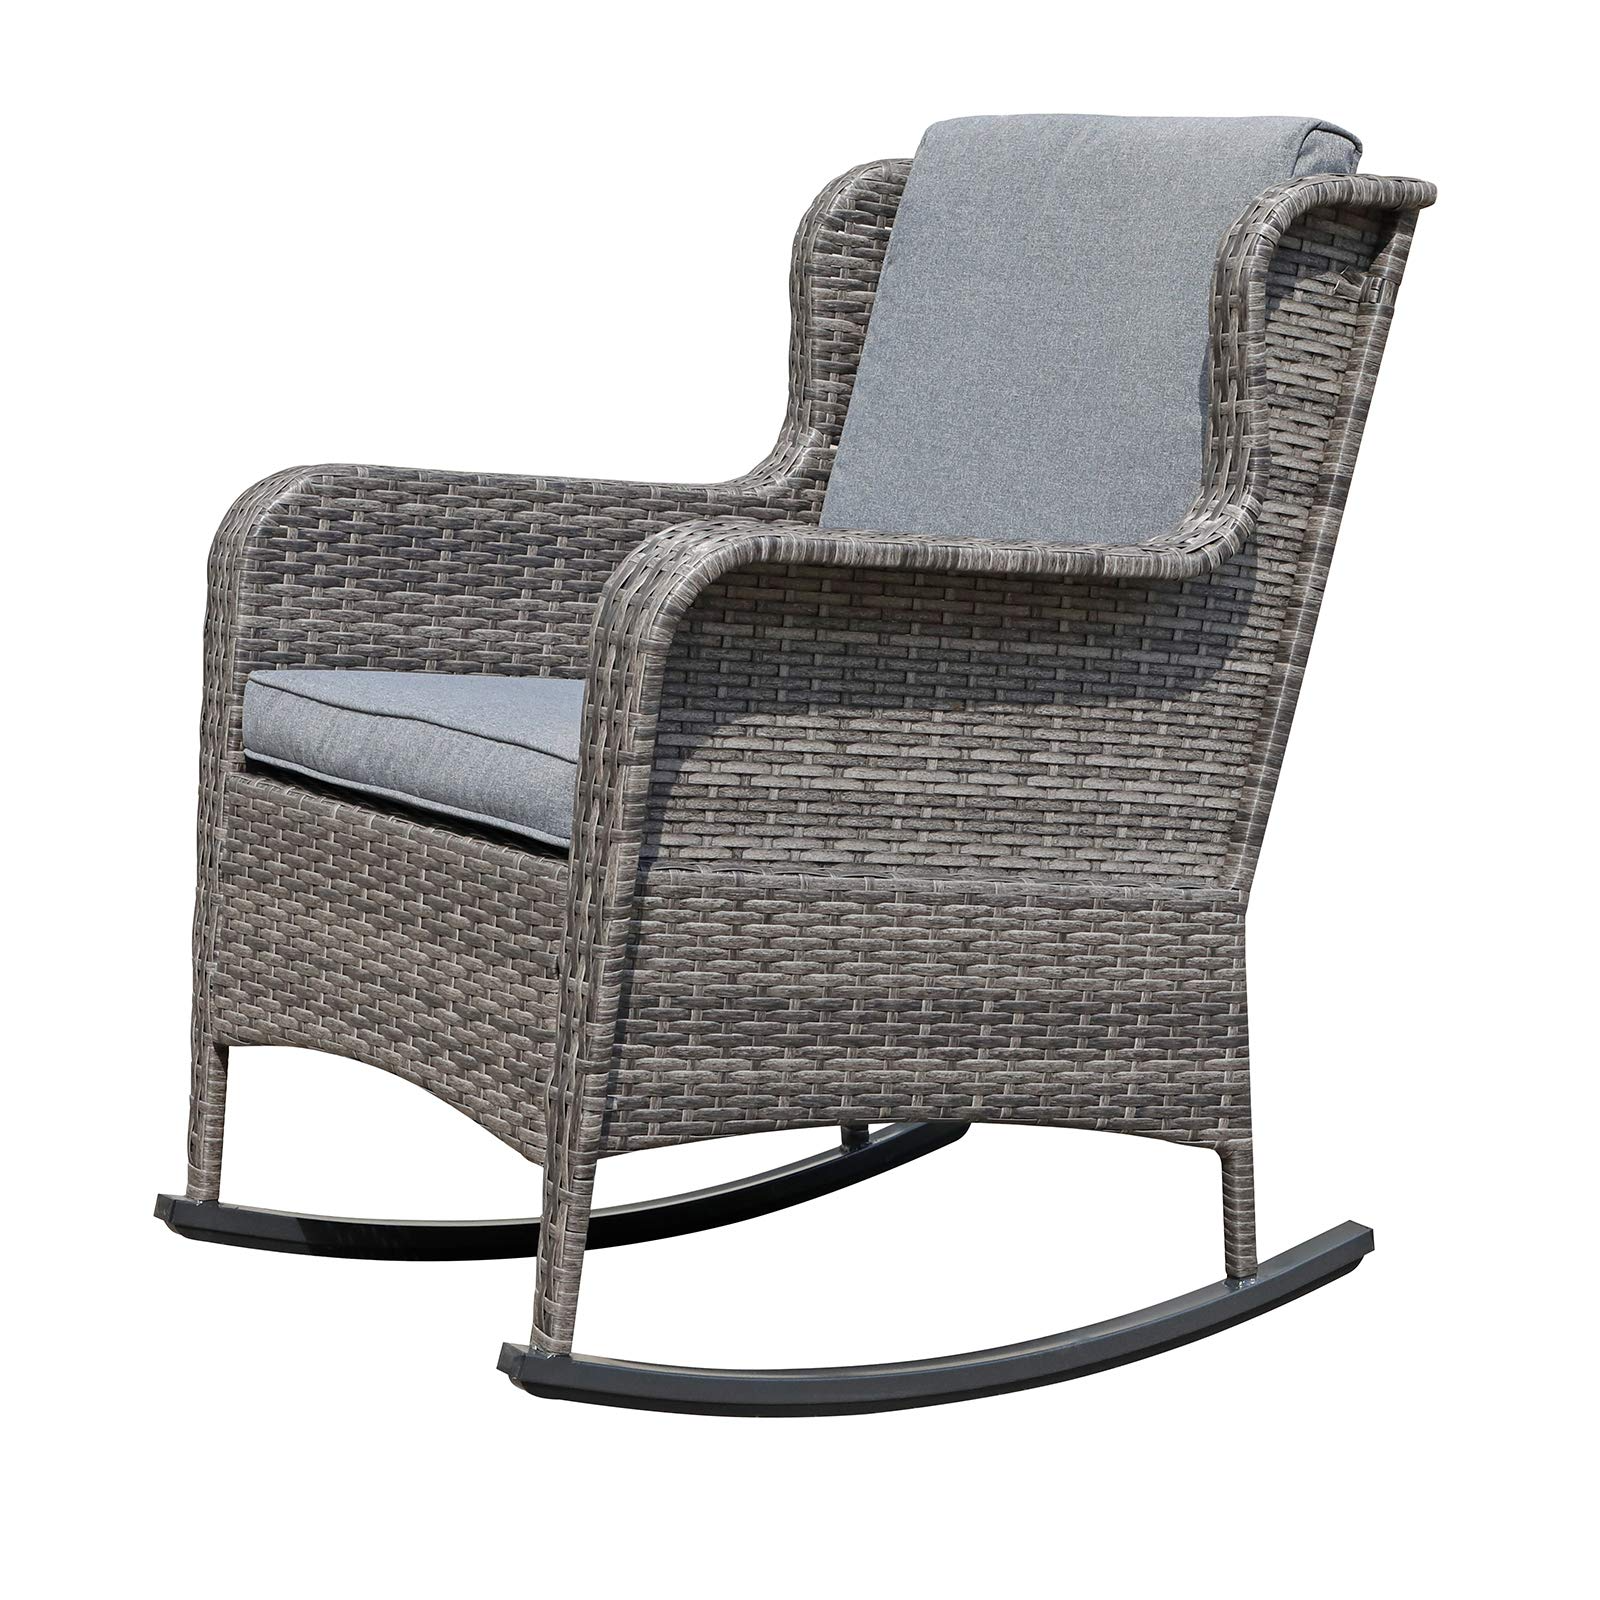 Soleil Jardin Wicker High Back & Slat Back Rocking Chair, Gray - image 1 of 7